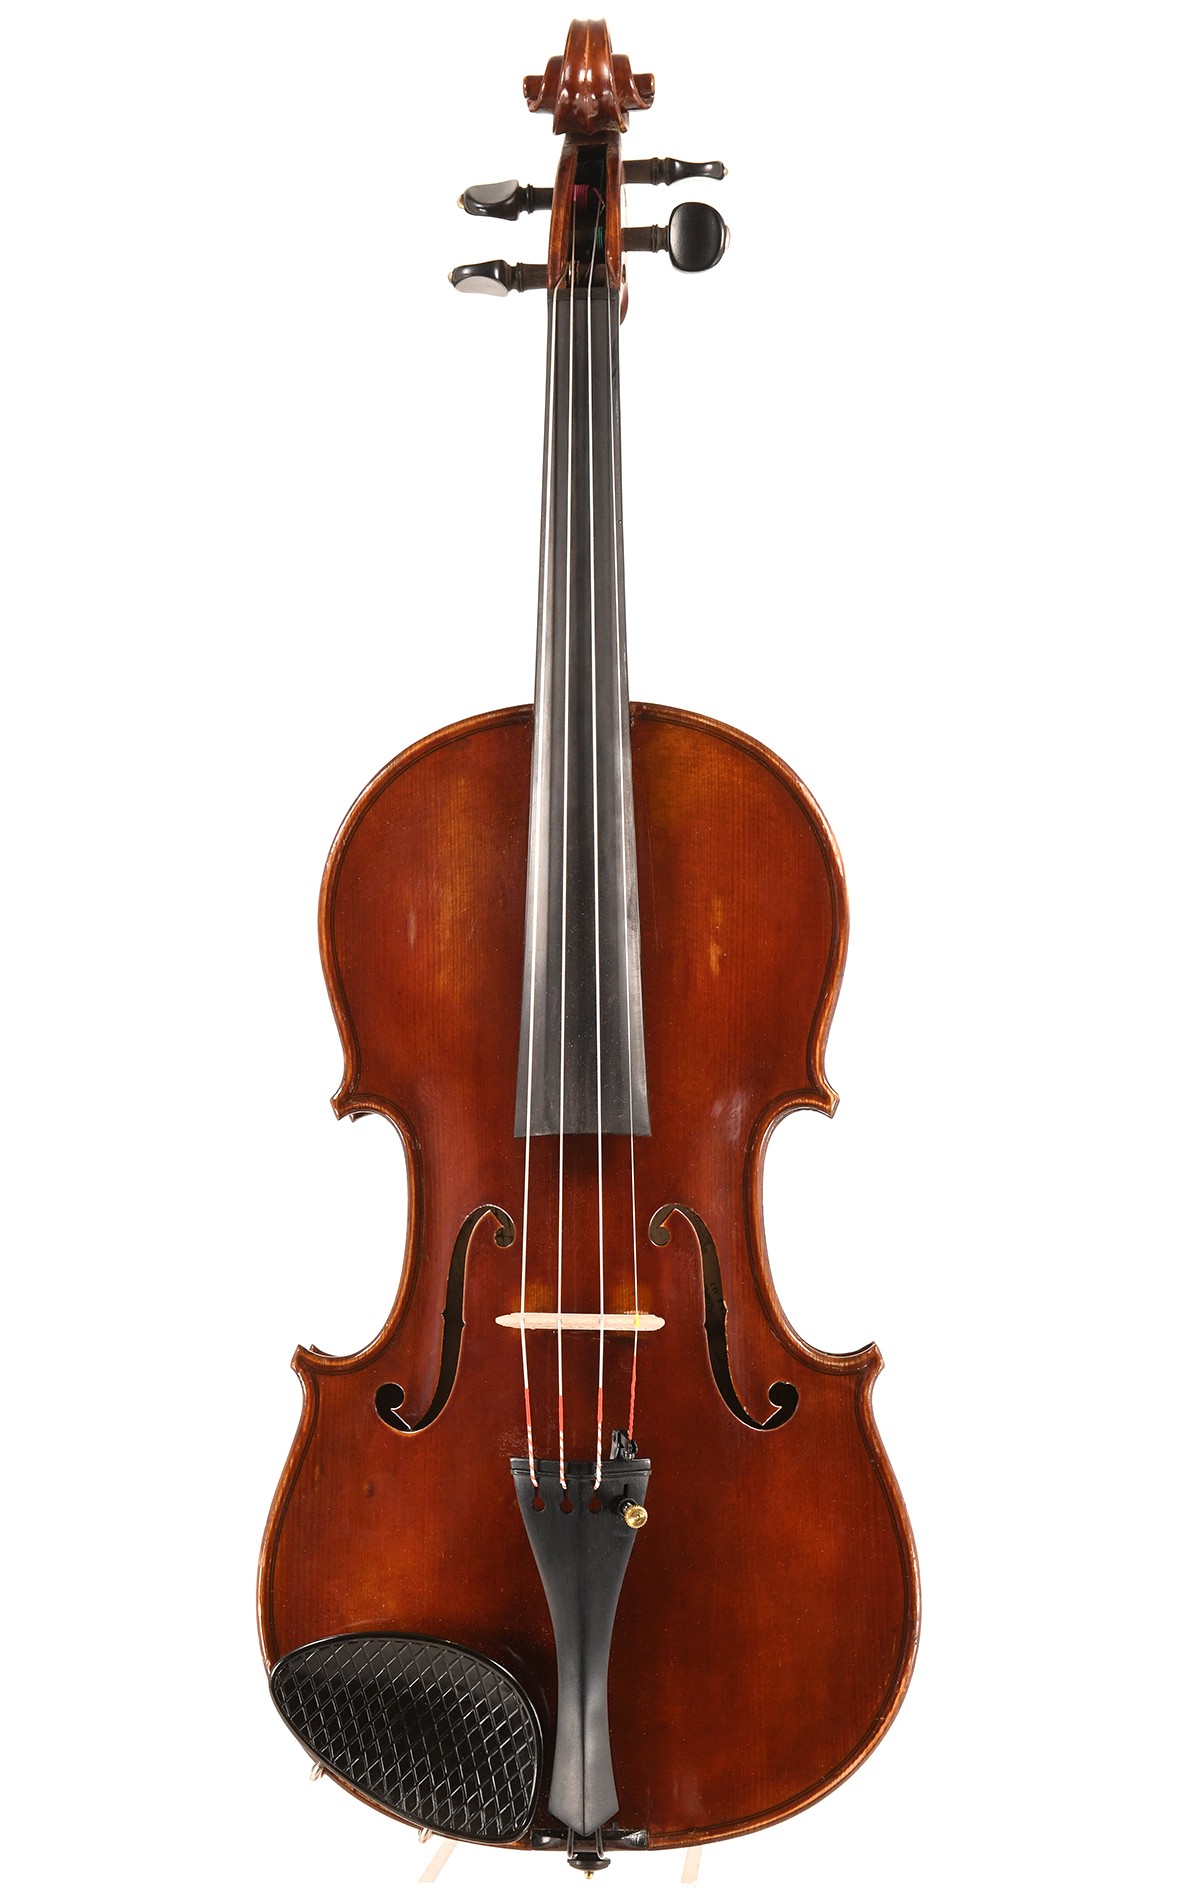 SALE Paul Bisch, French violin after Stradivarius, 1940